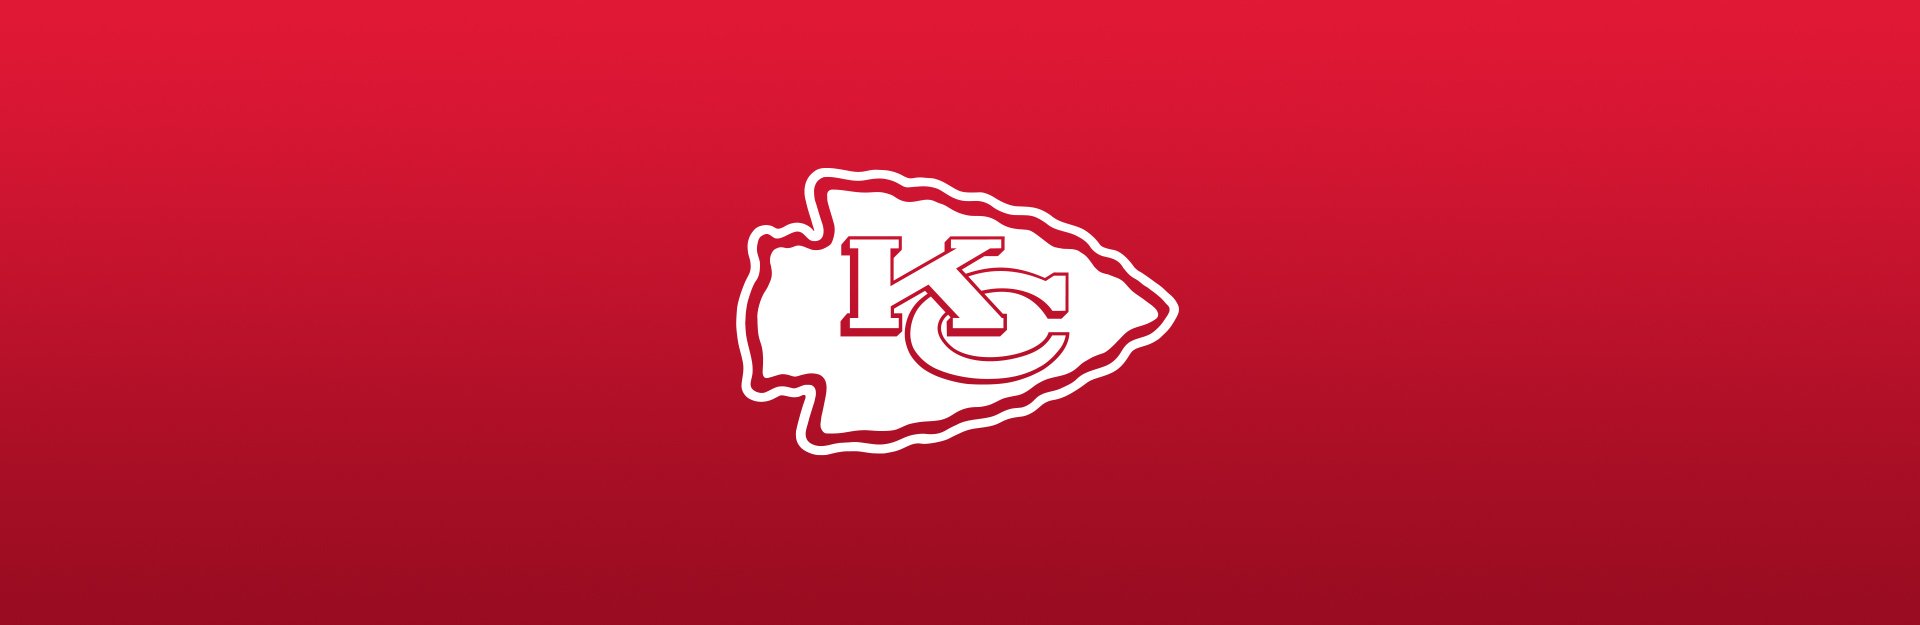 Kansas City Chiefs logo on red background